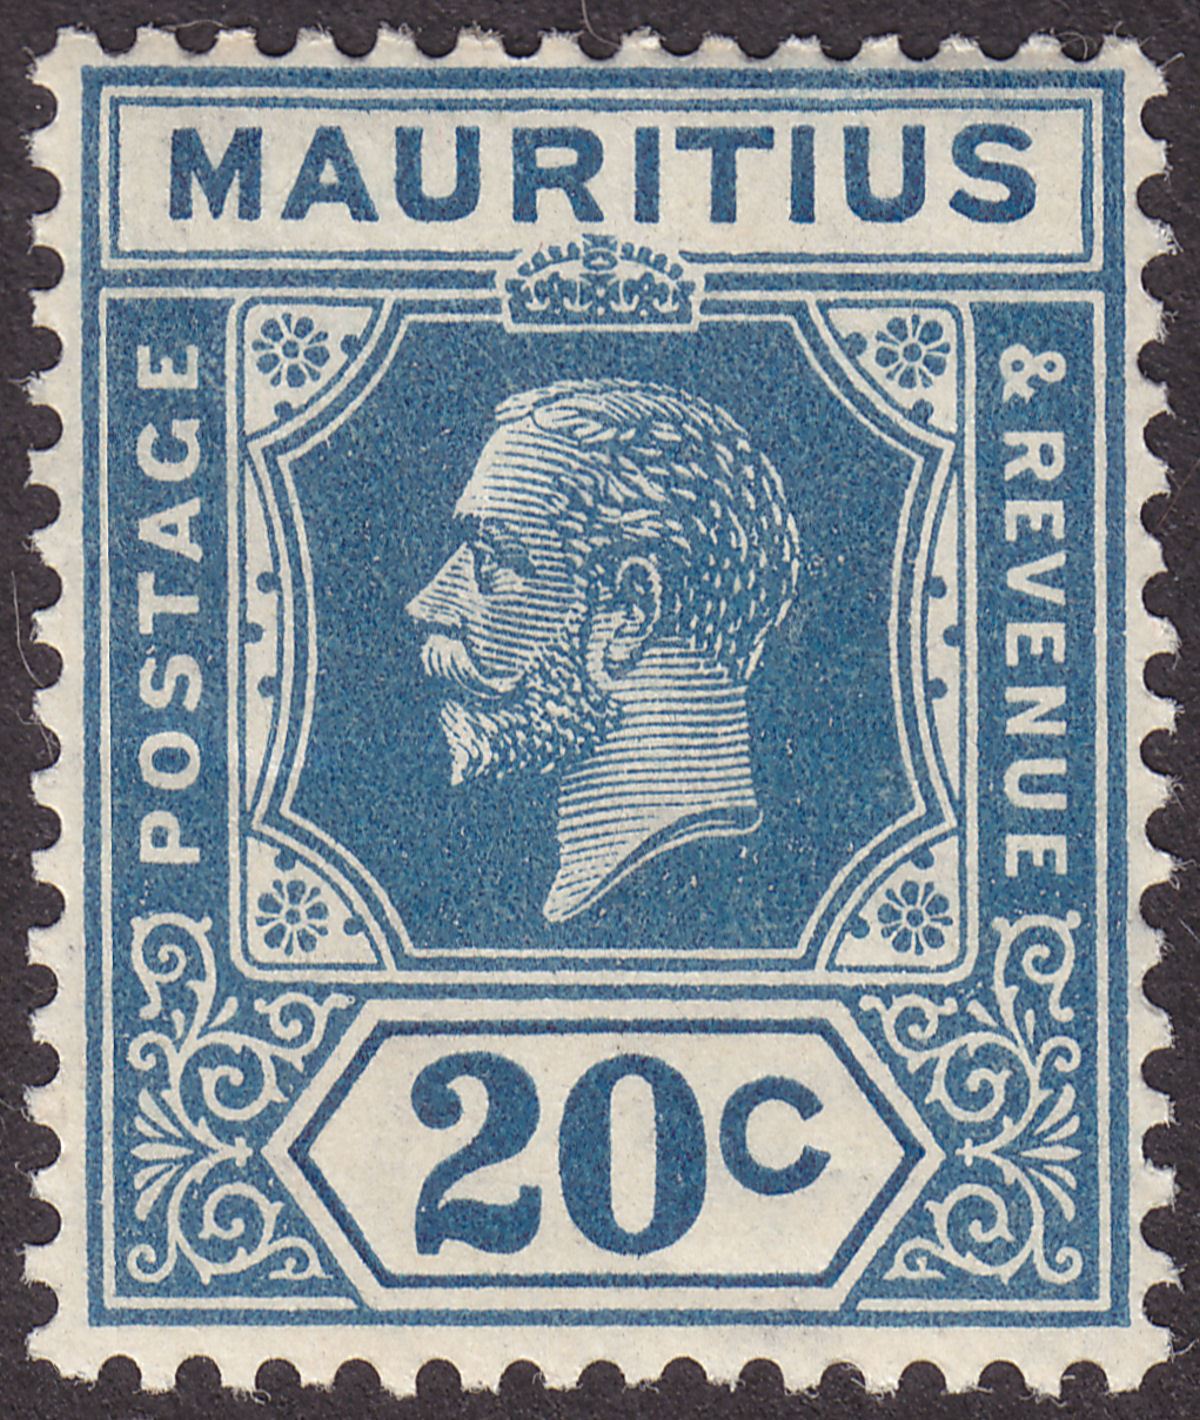 Mauritius 1934 KGV 20c Prussian Blue Die II Mint SG235a cat £29 hinge thin